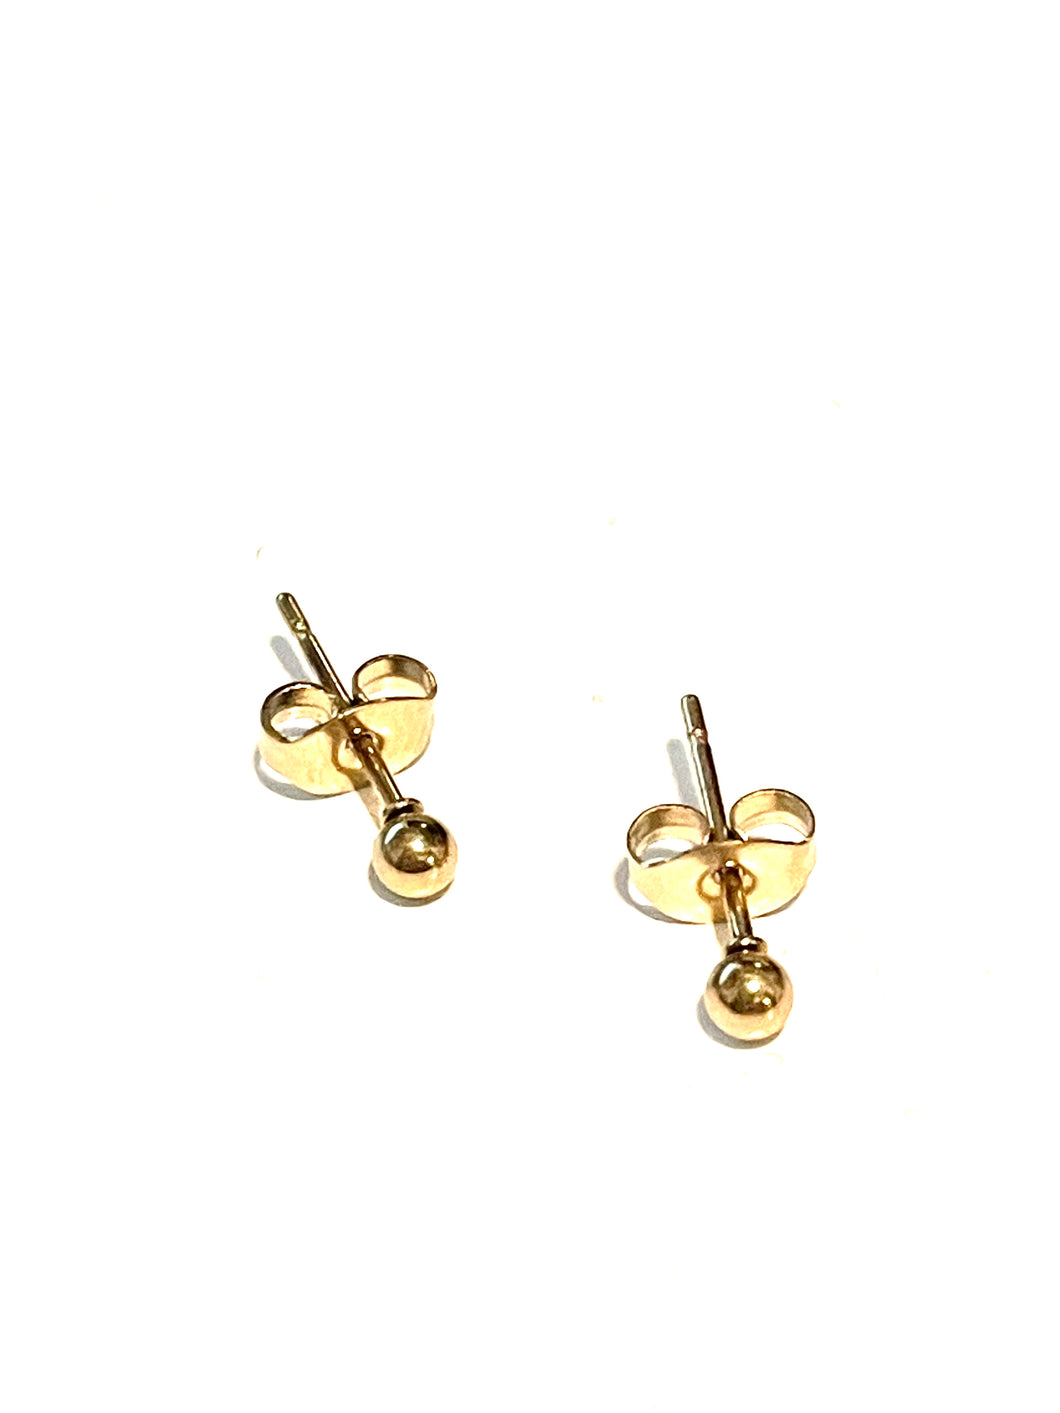 Earrings | Tiny Gold Ball Studs FLASH SALE